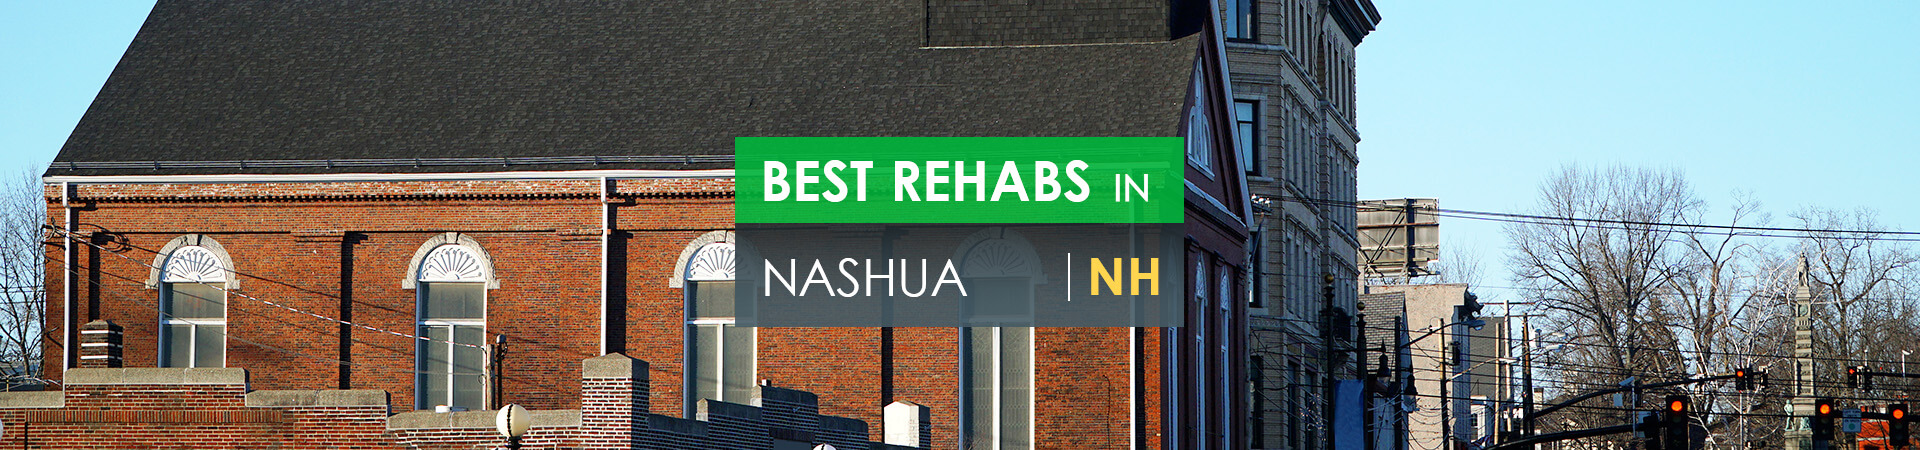 Best rehabs in Nashua, NH